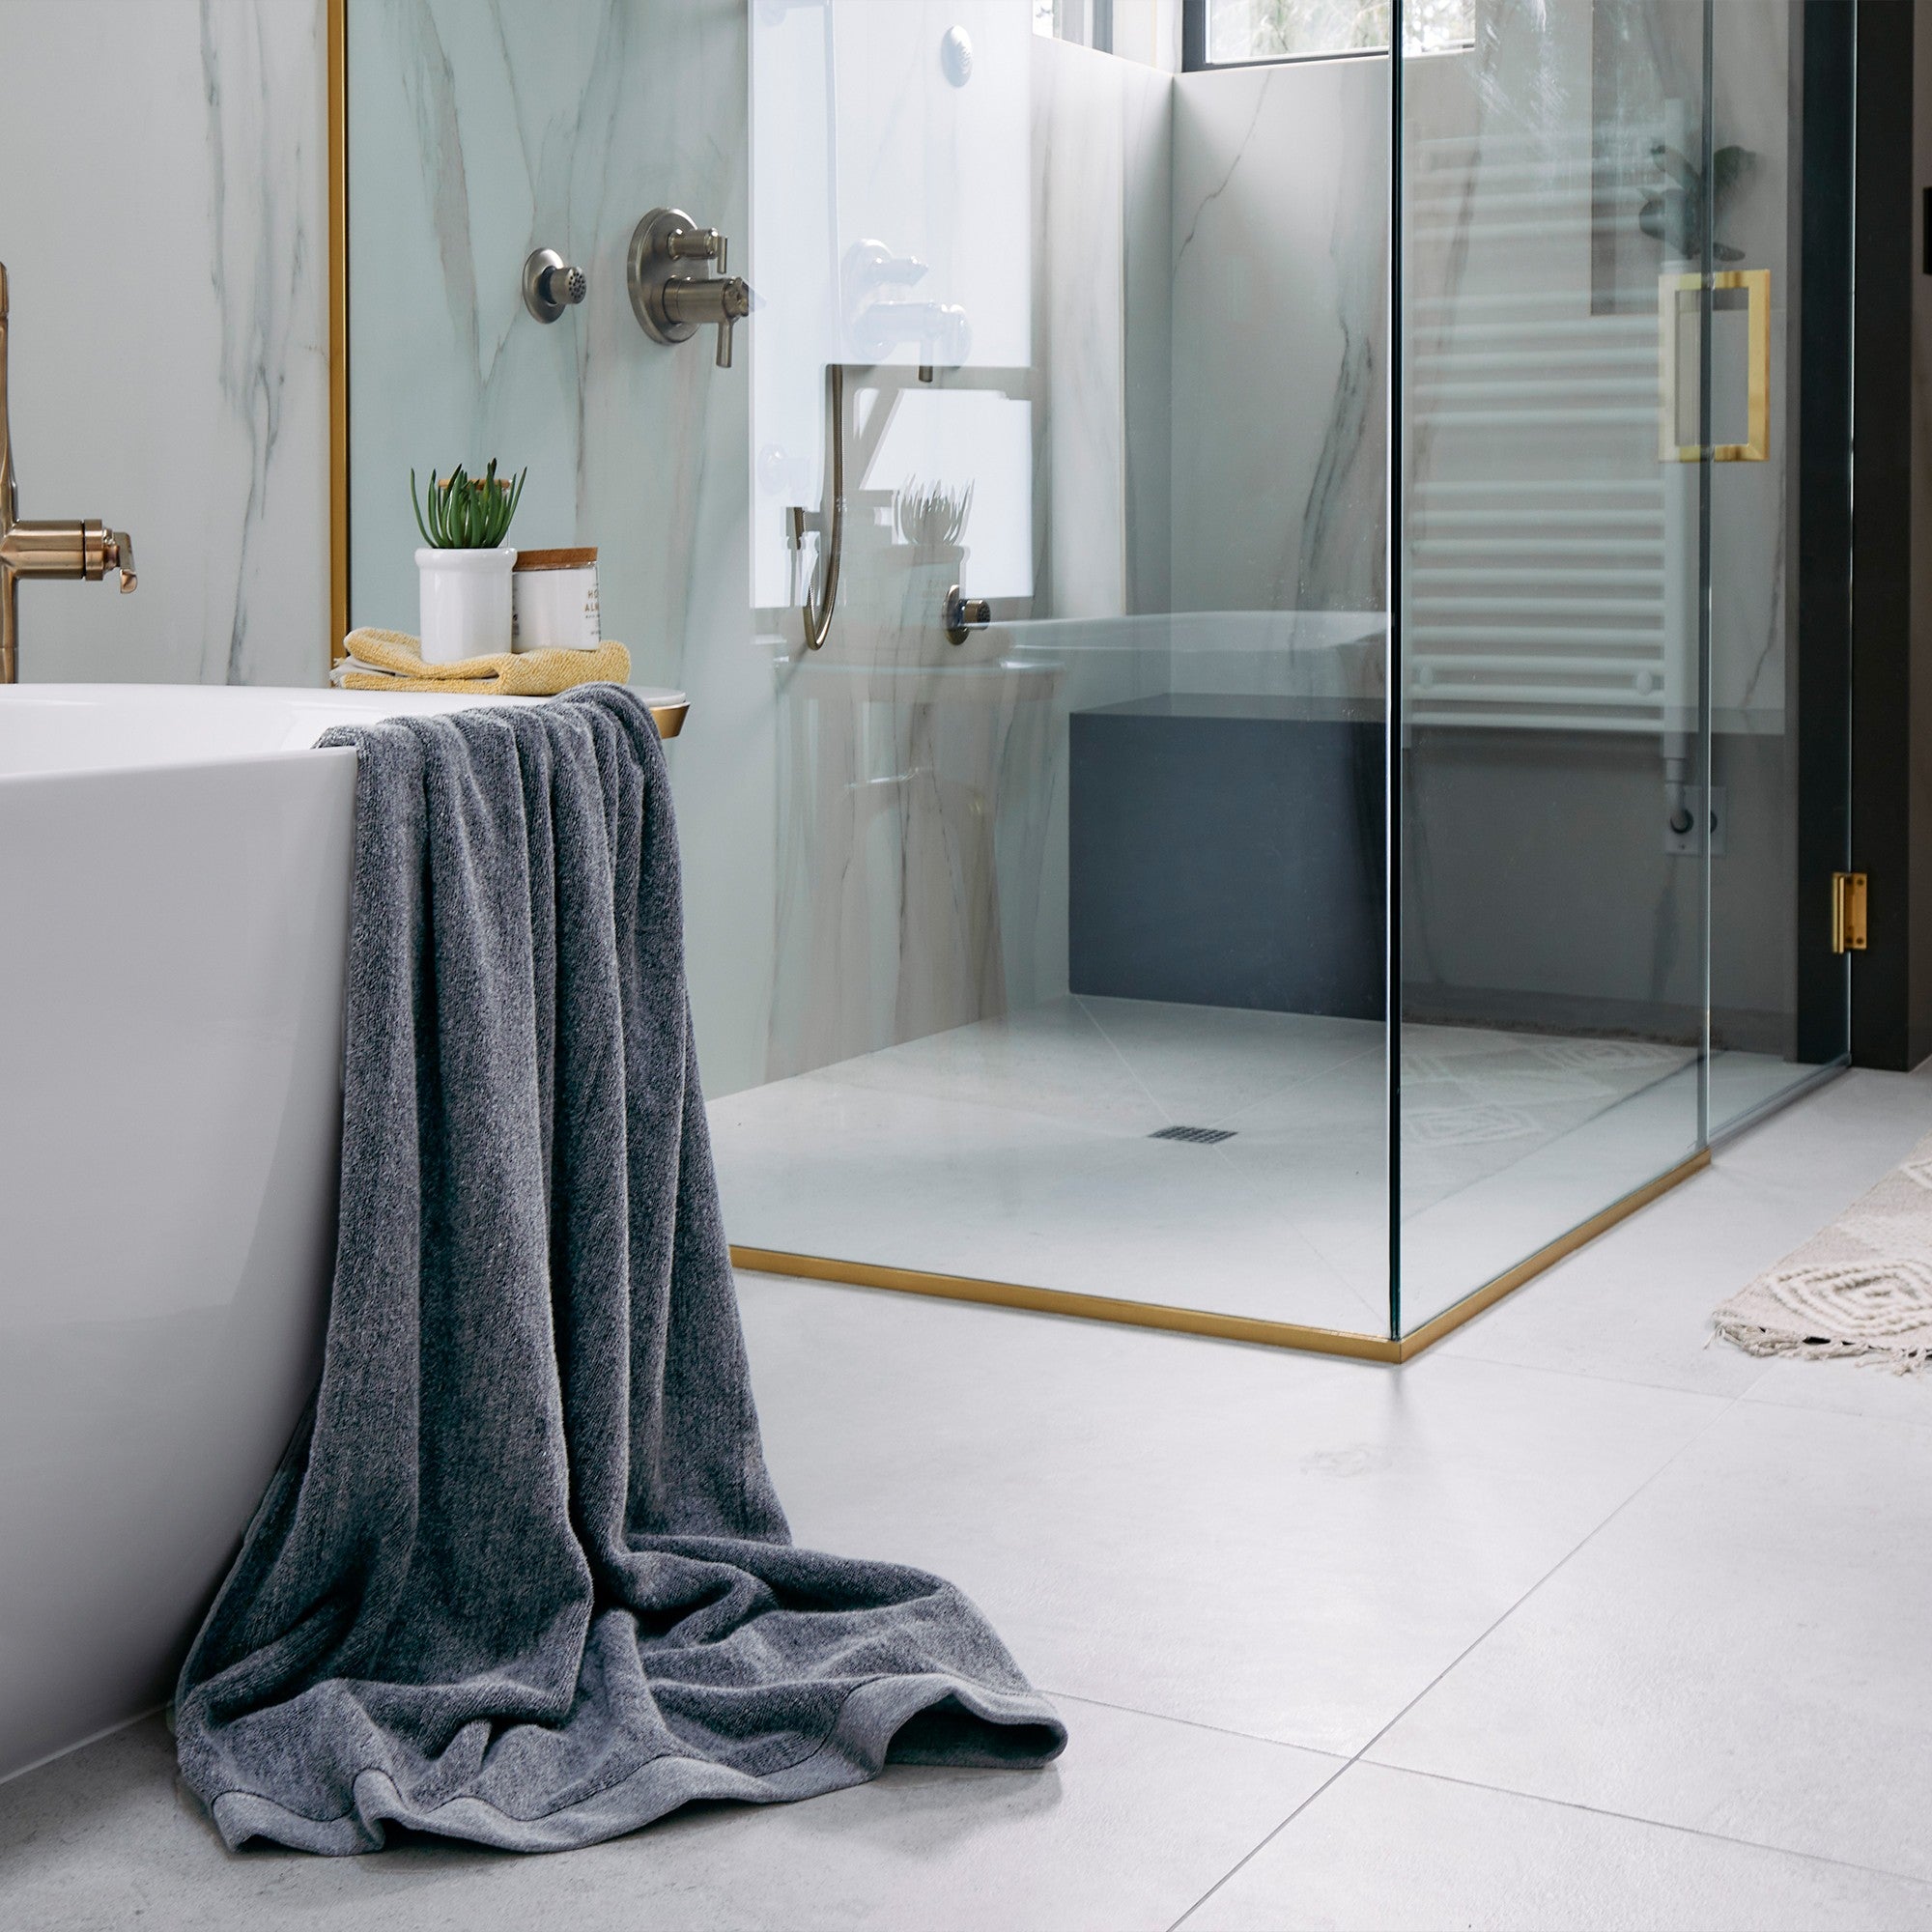 luxury bathroom with charcoal bath sheet hanging over tub